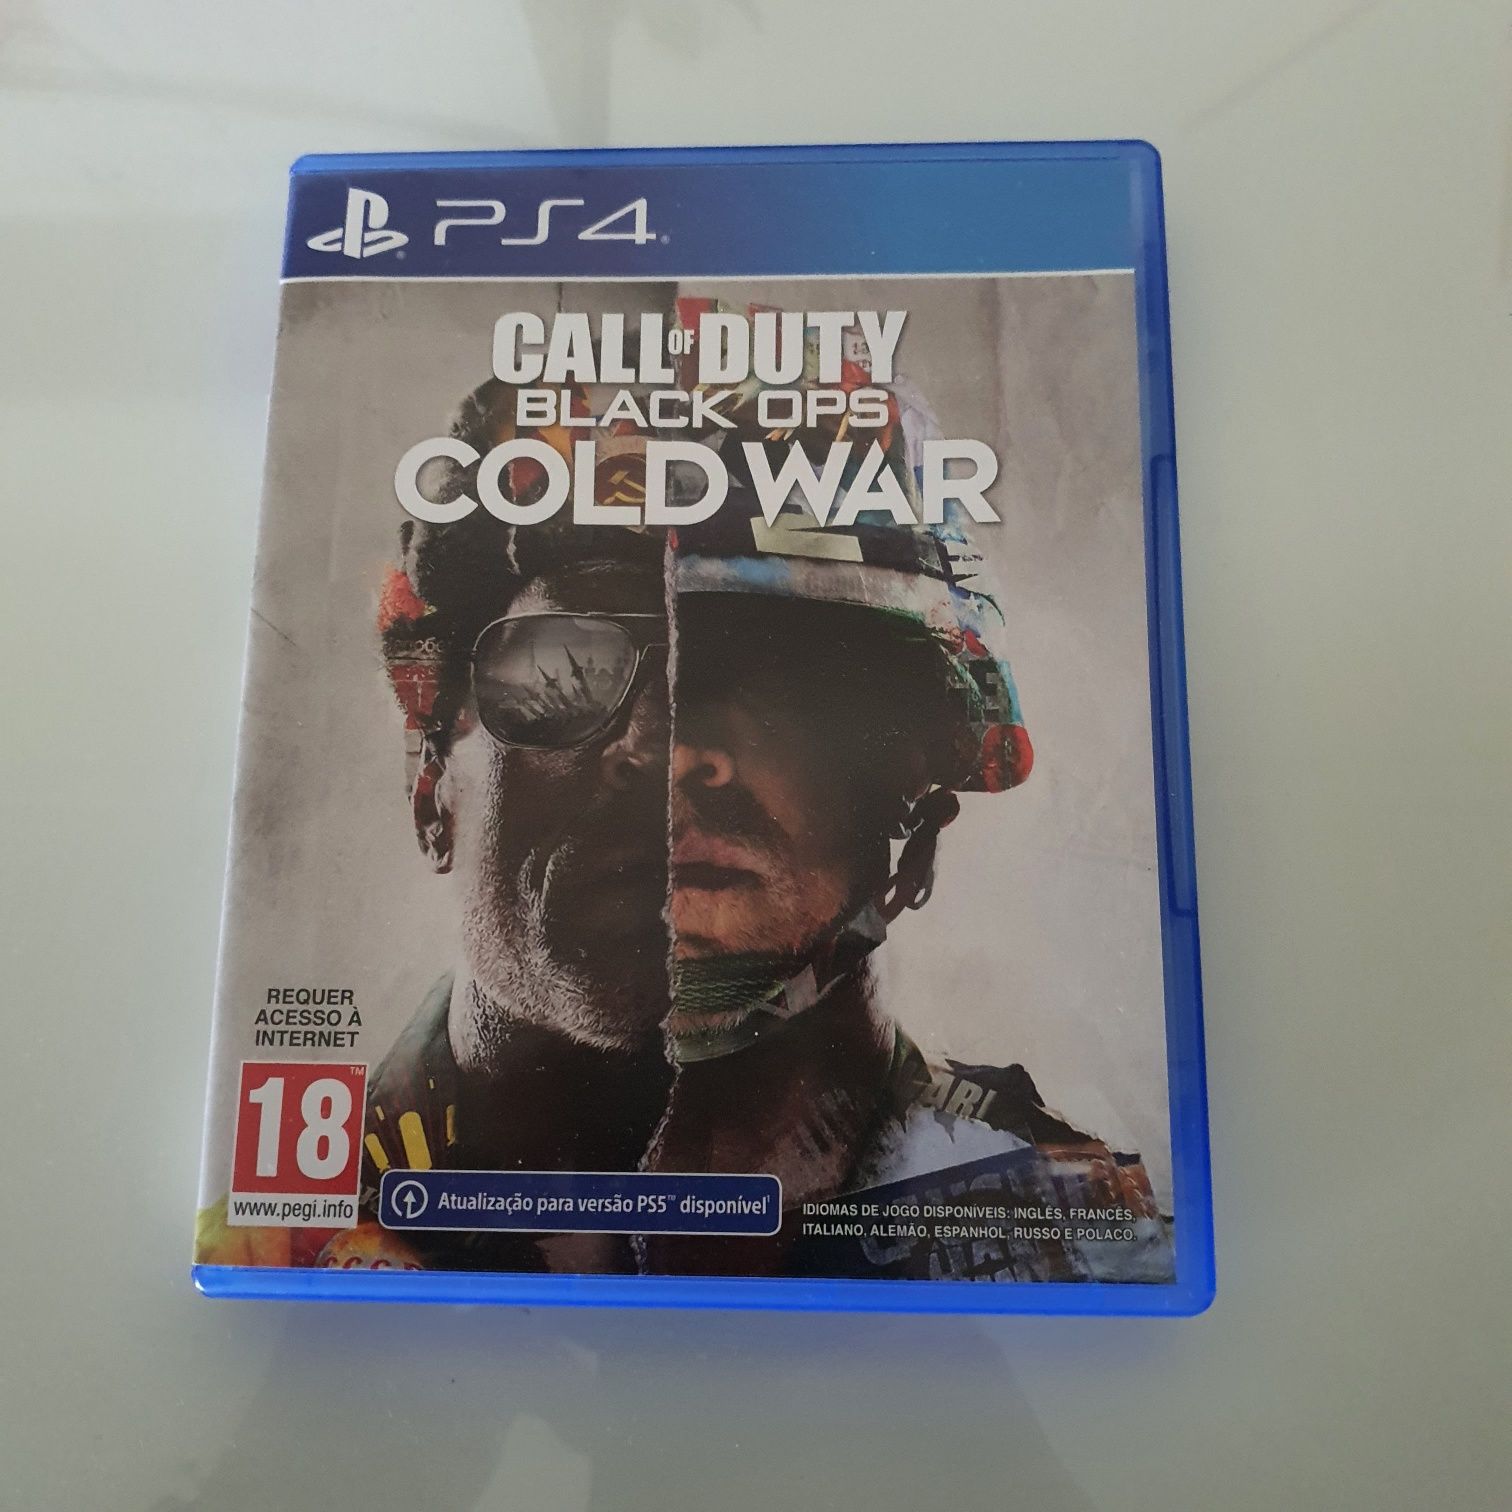 Call of Duty Cold War para a PS4